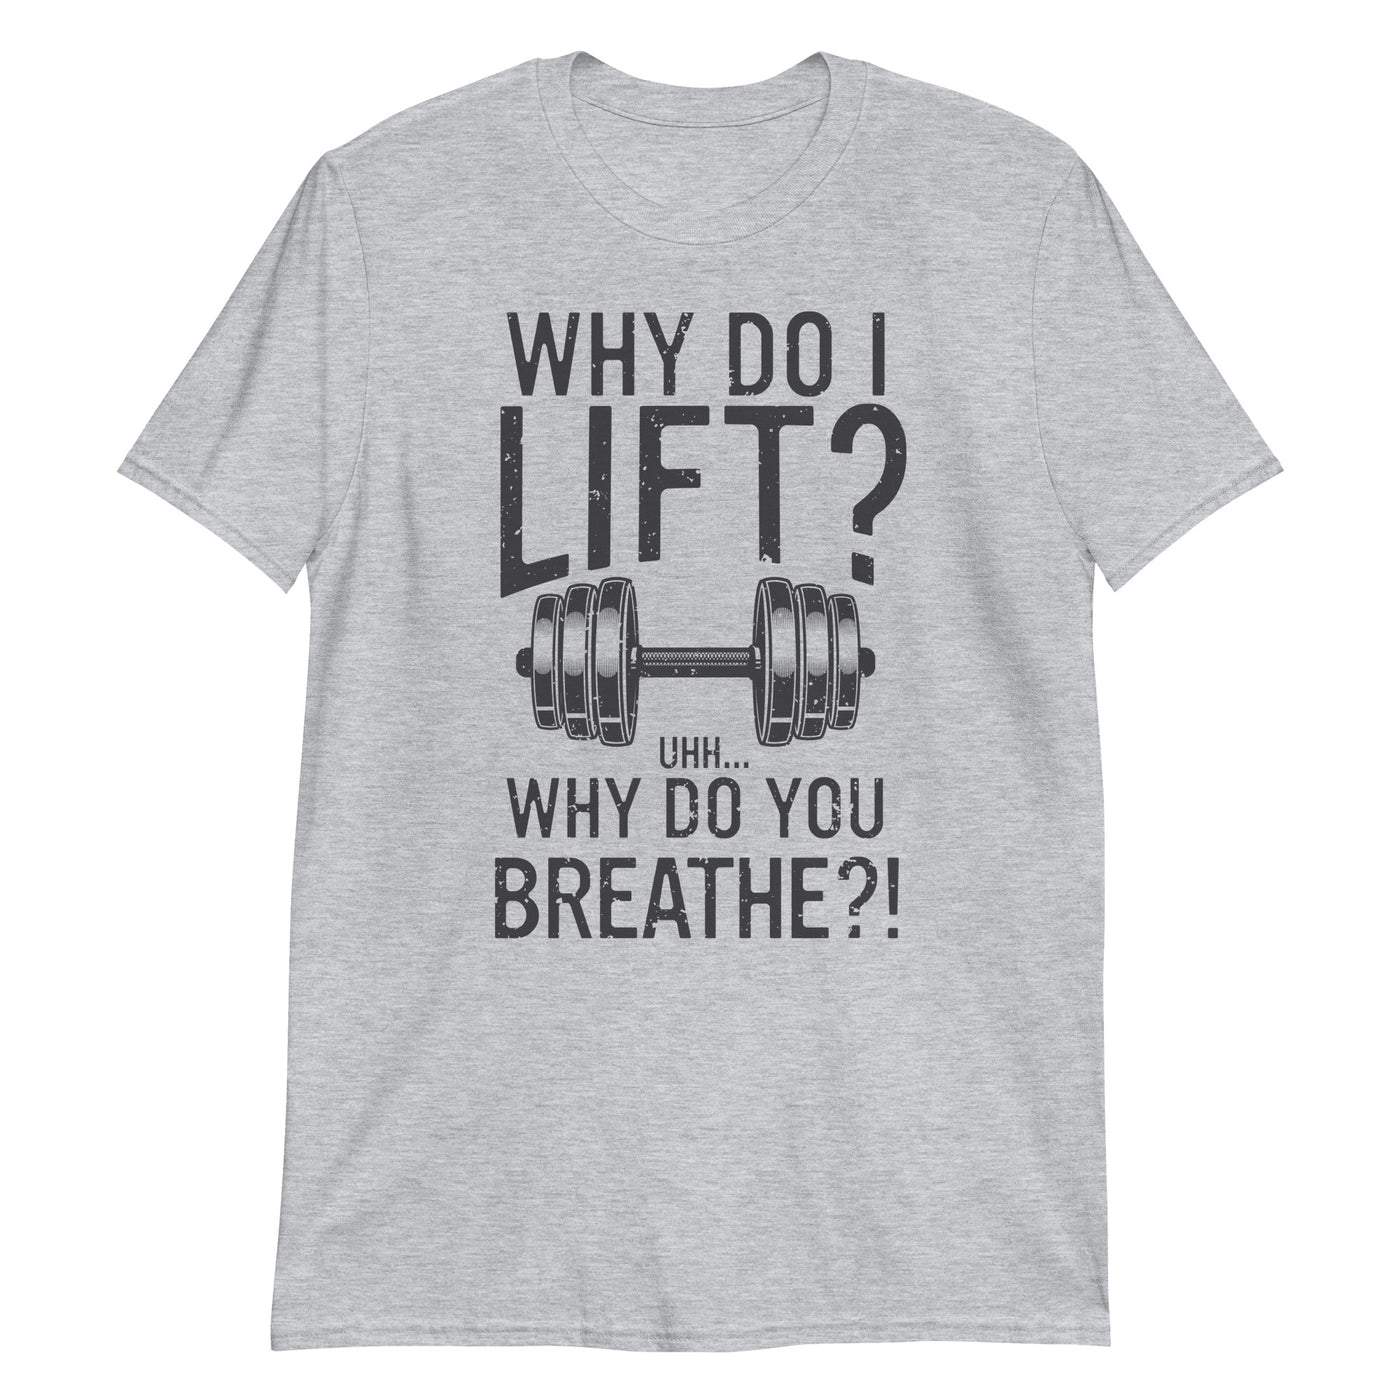 Why do I lift?